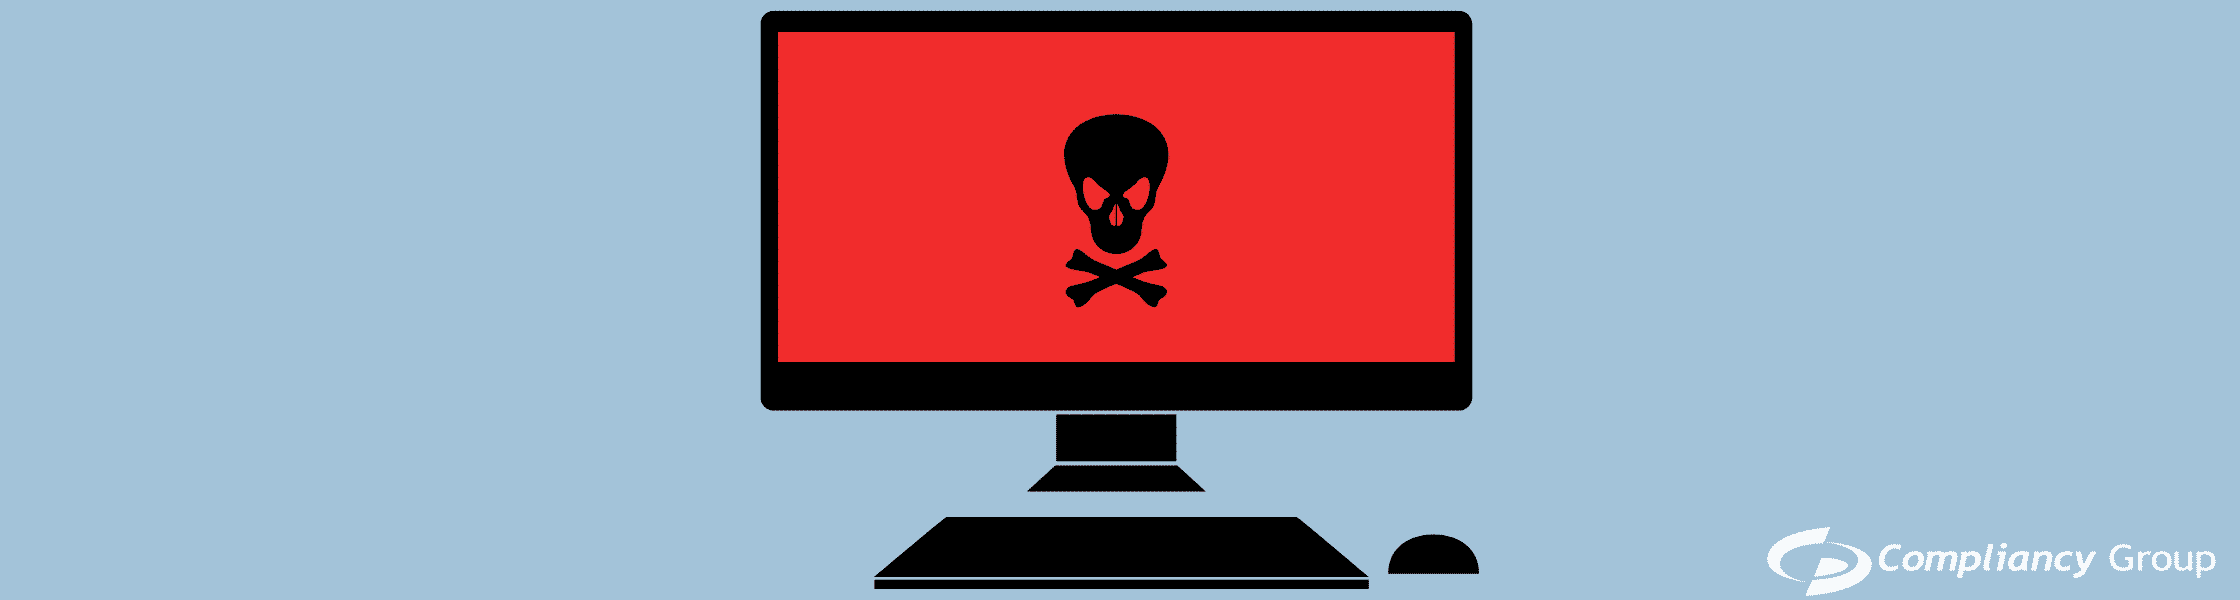 Healthcare Ransomware Attacks